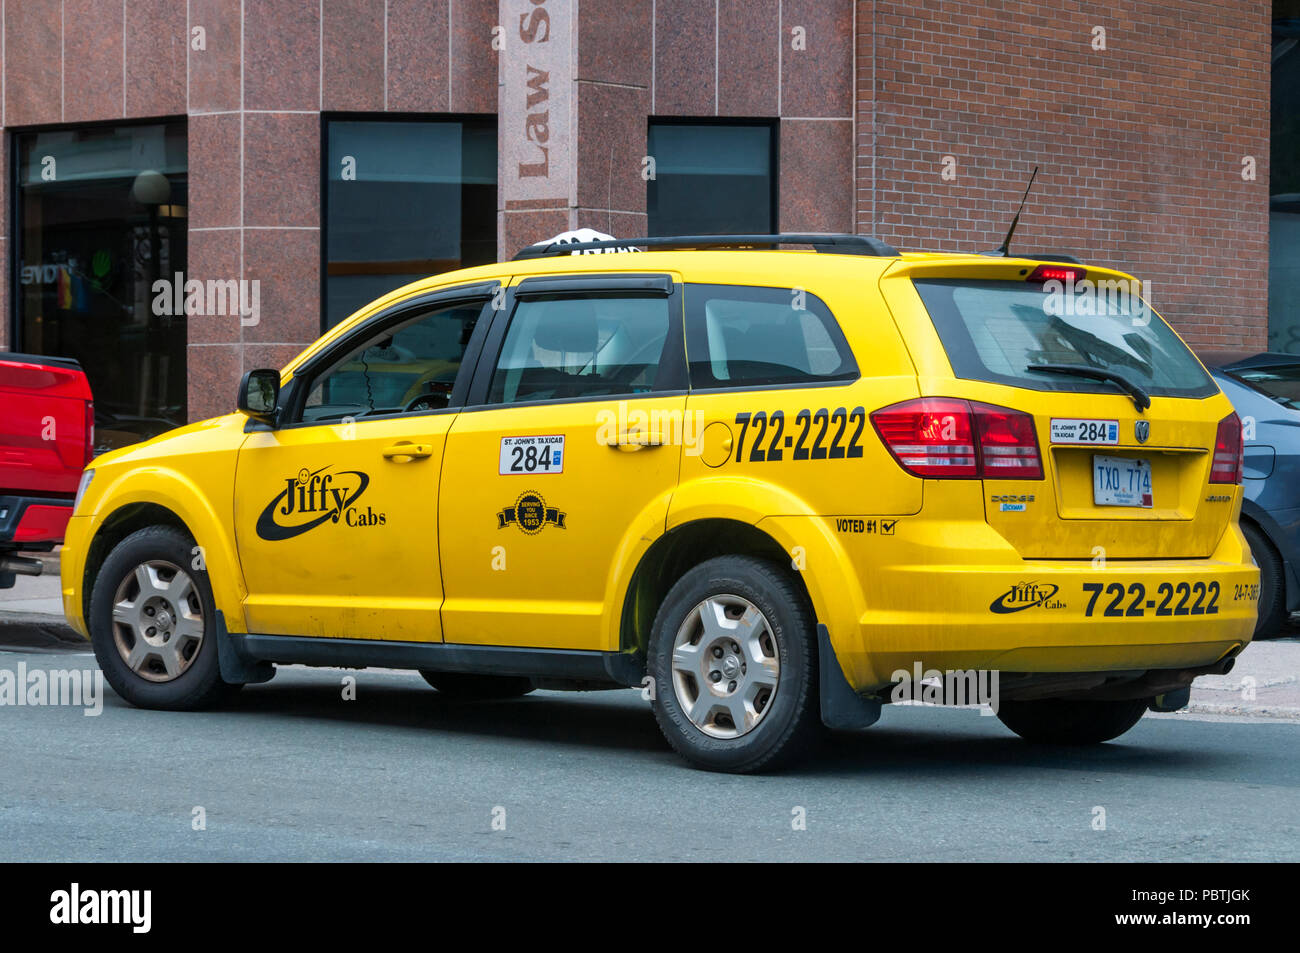 A yellow Jiffy Cab in St John's, Newfoundland. Stock Photo